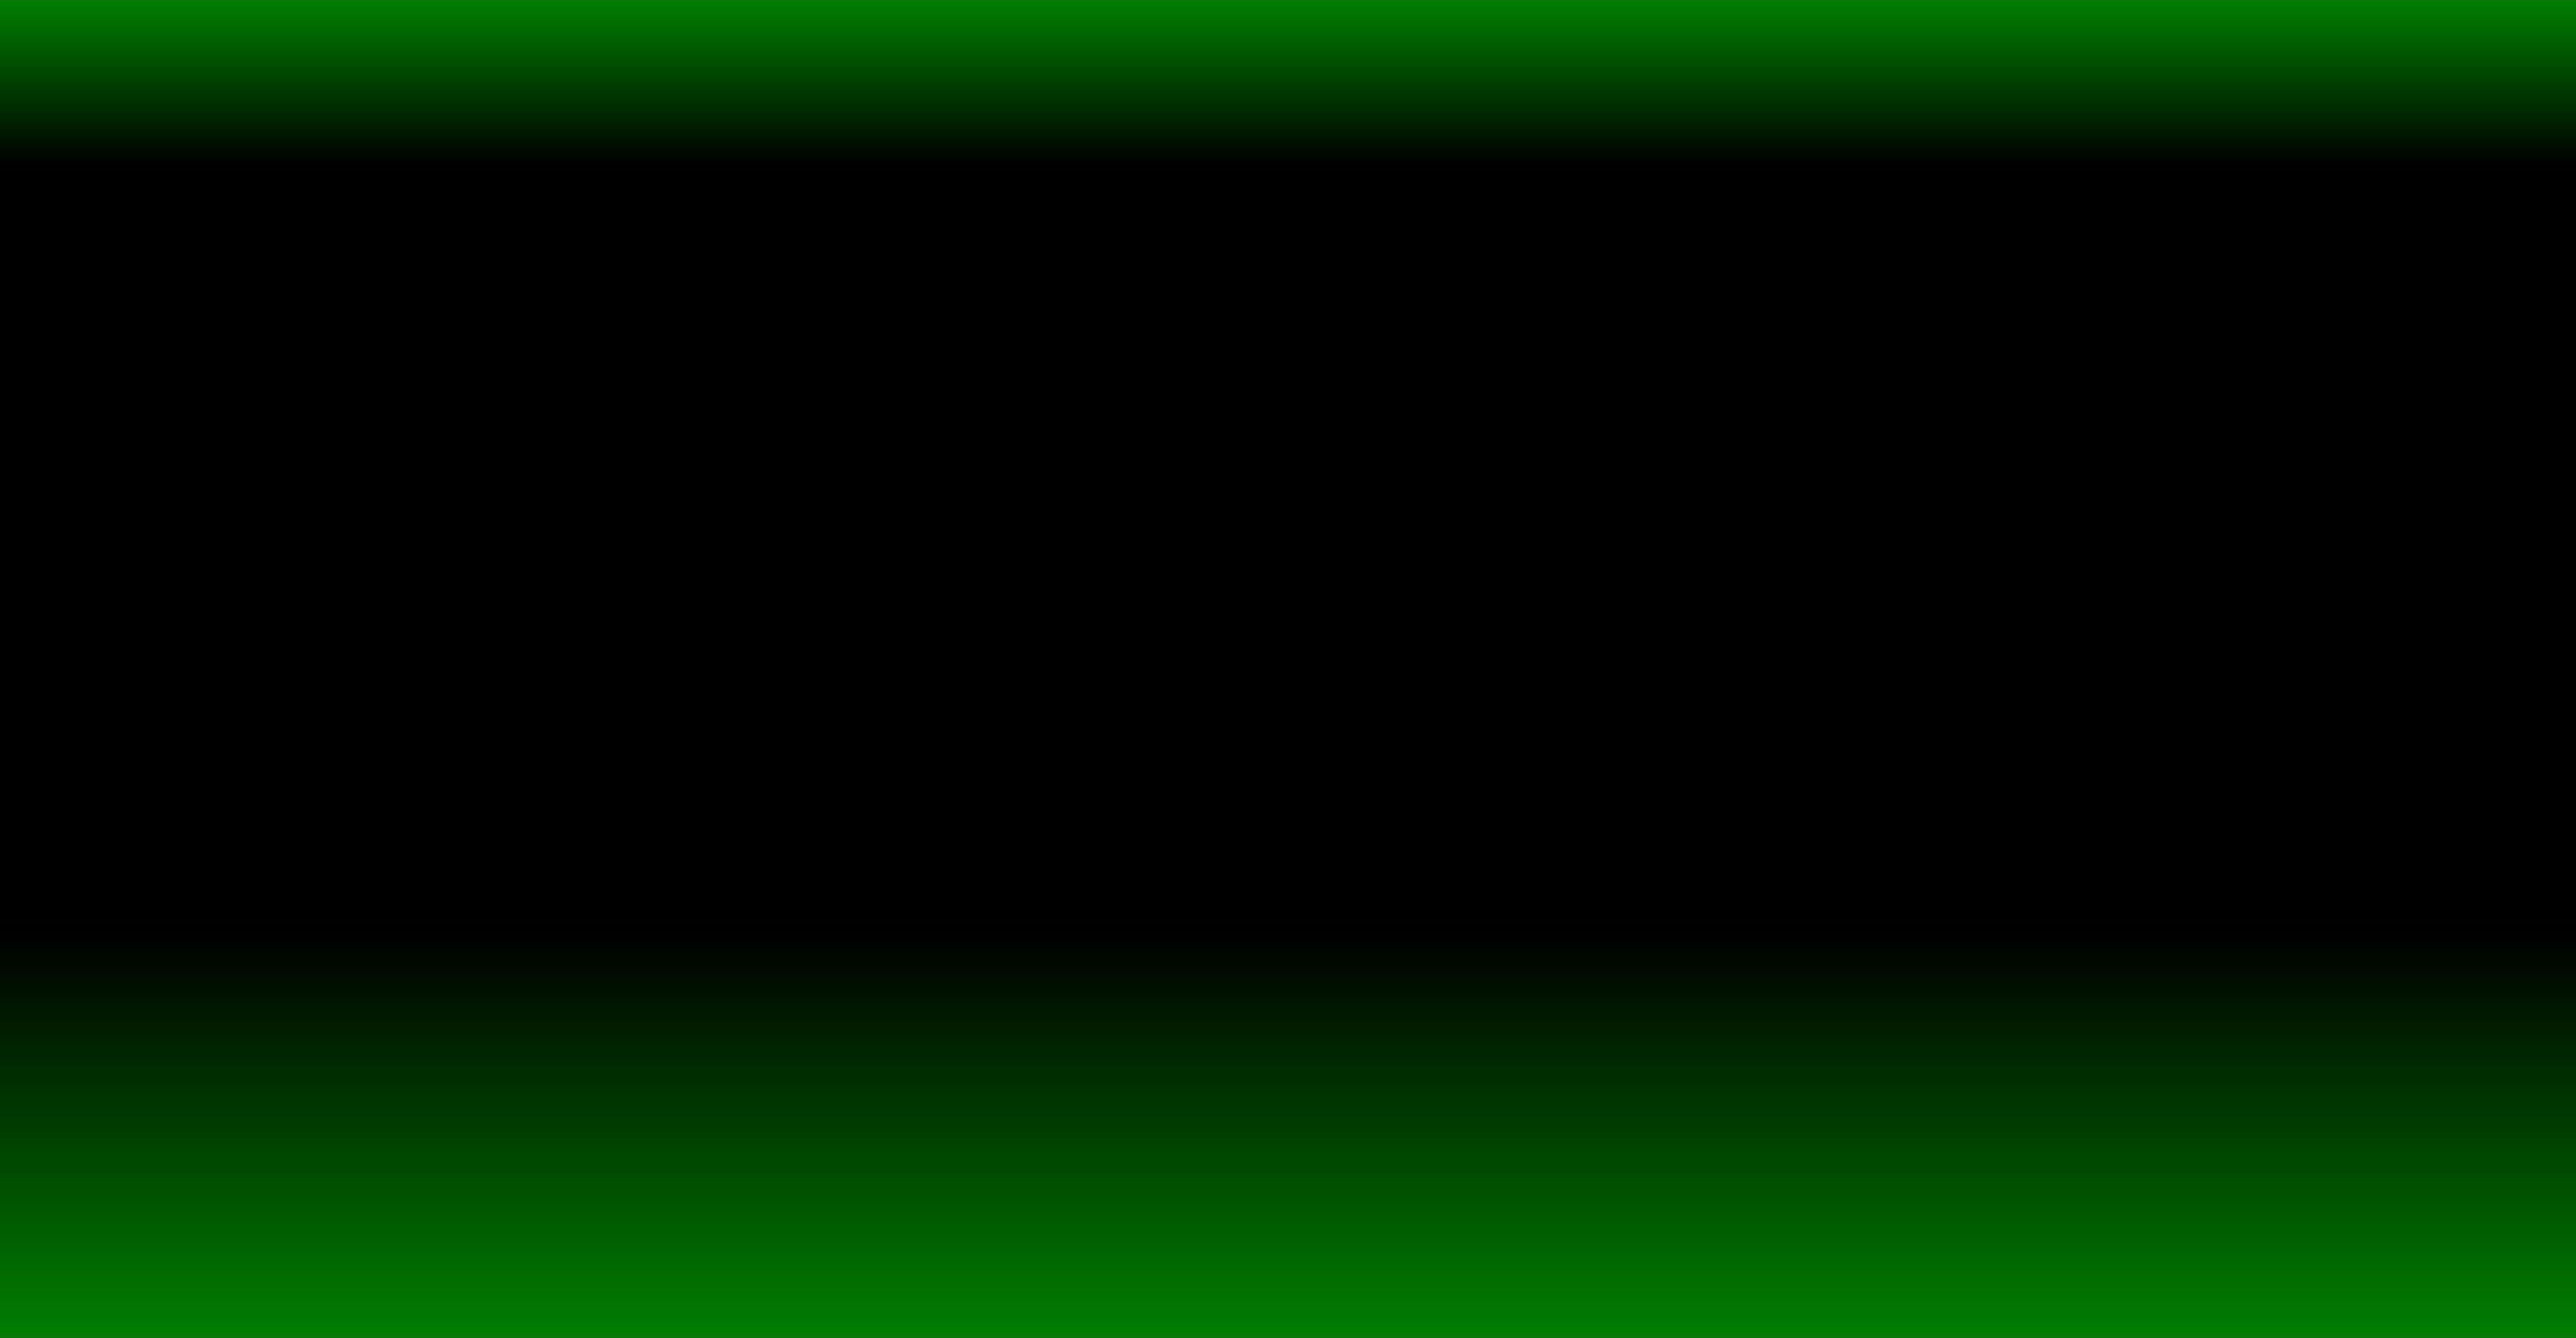 Green-Black Gradient Background by TheRPRTNetwork on DeviantArt